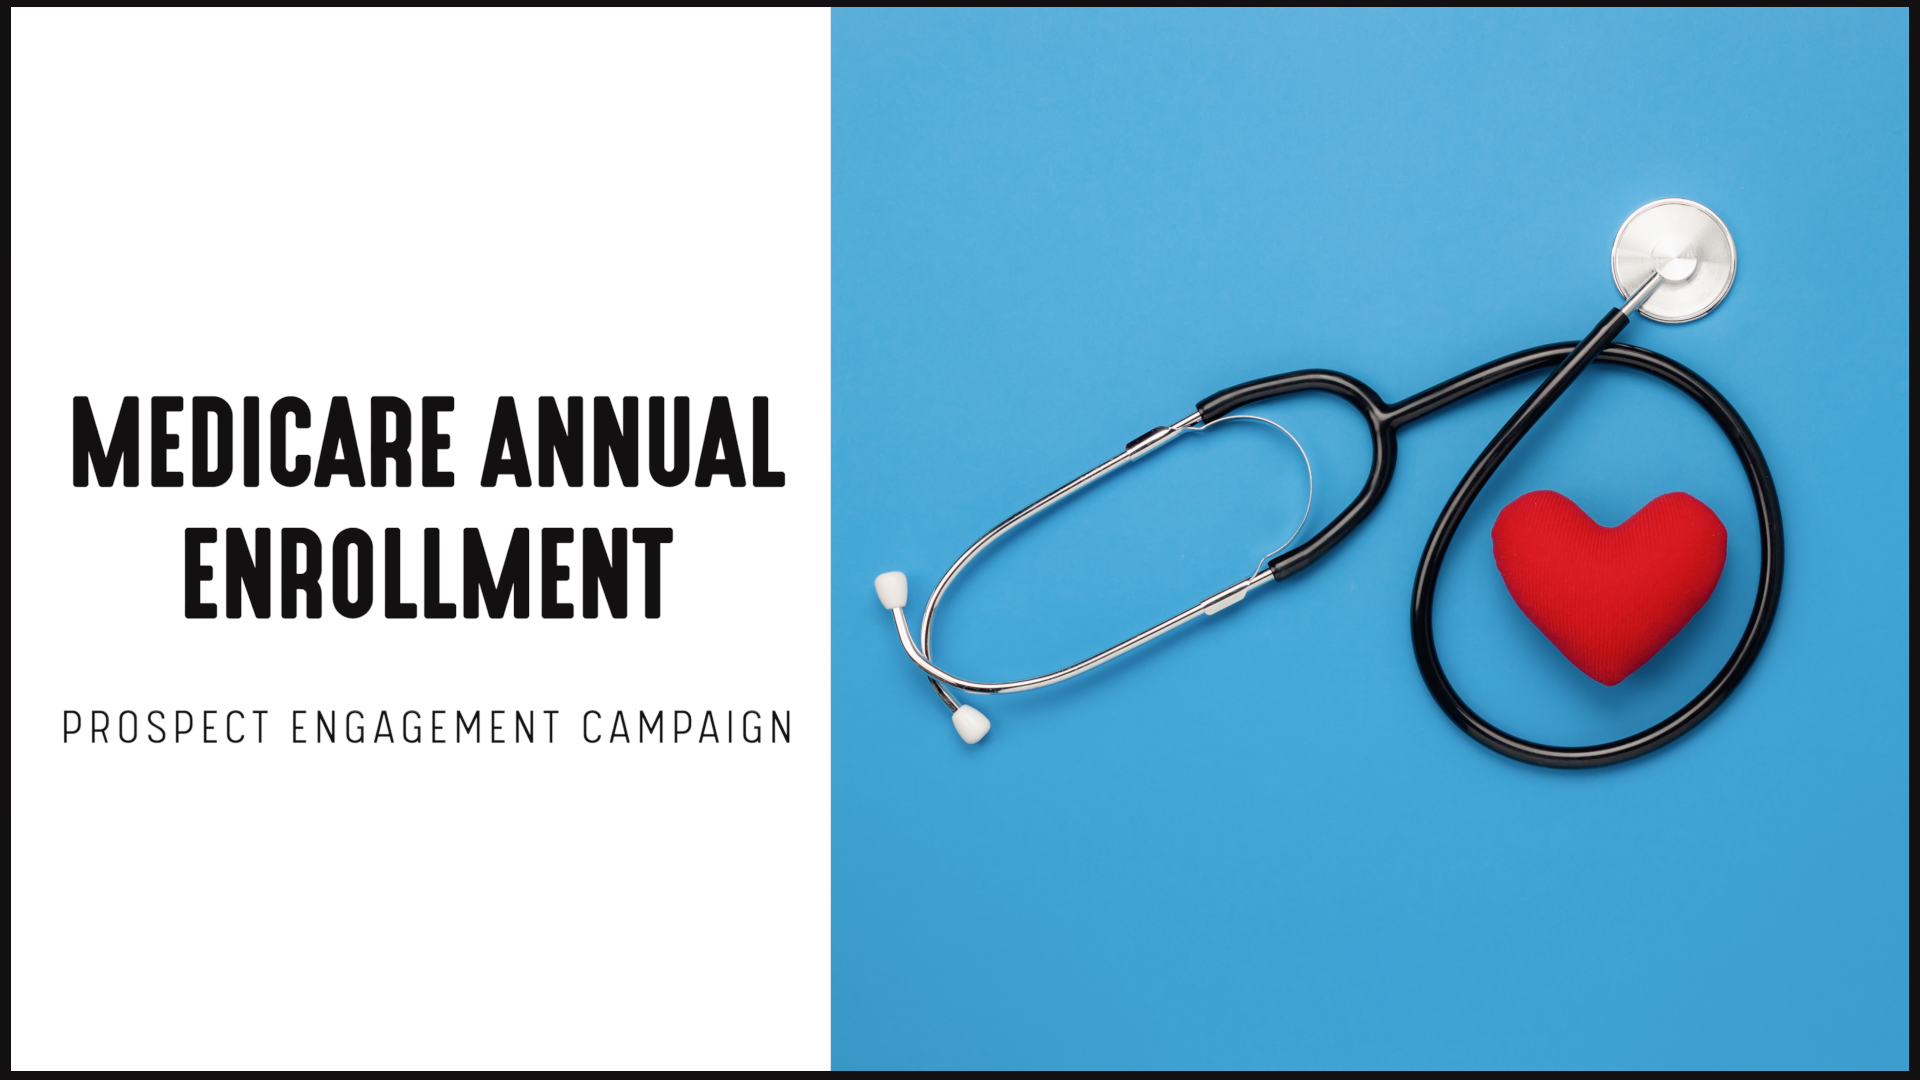 [NEW] Prospect Engagement Campaign | Medicare Annual Enrollment 2021